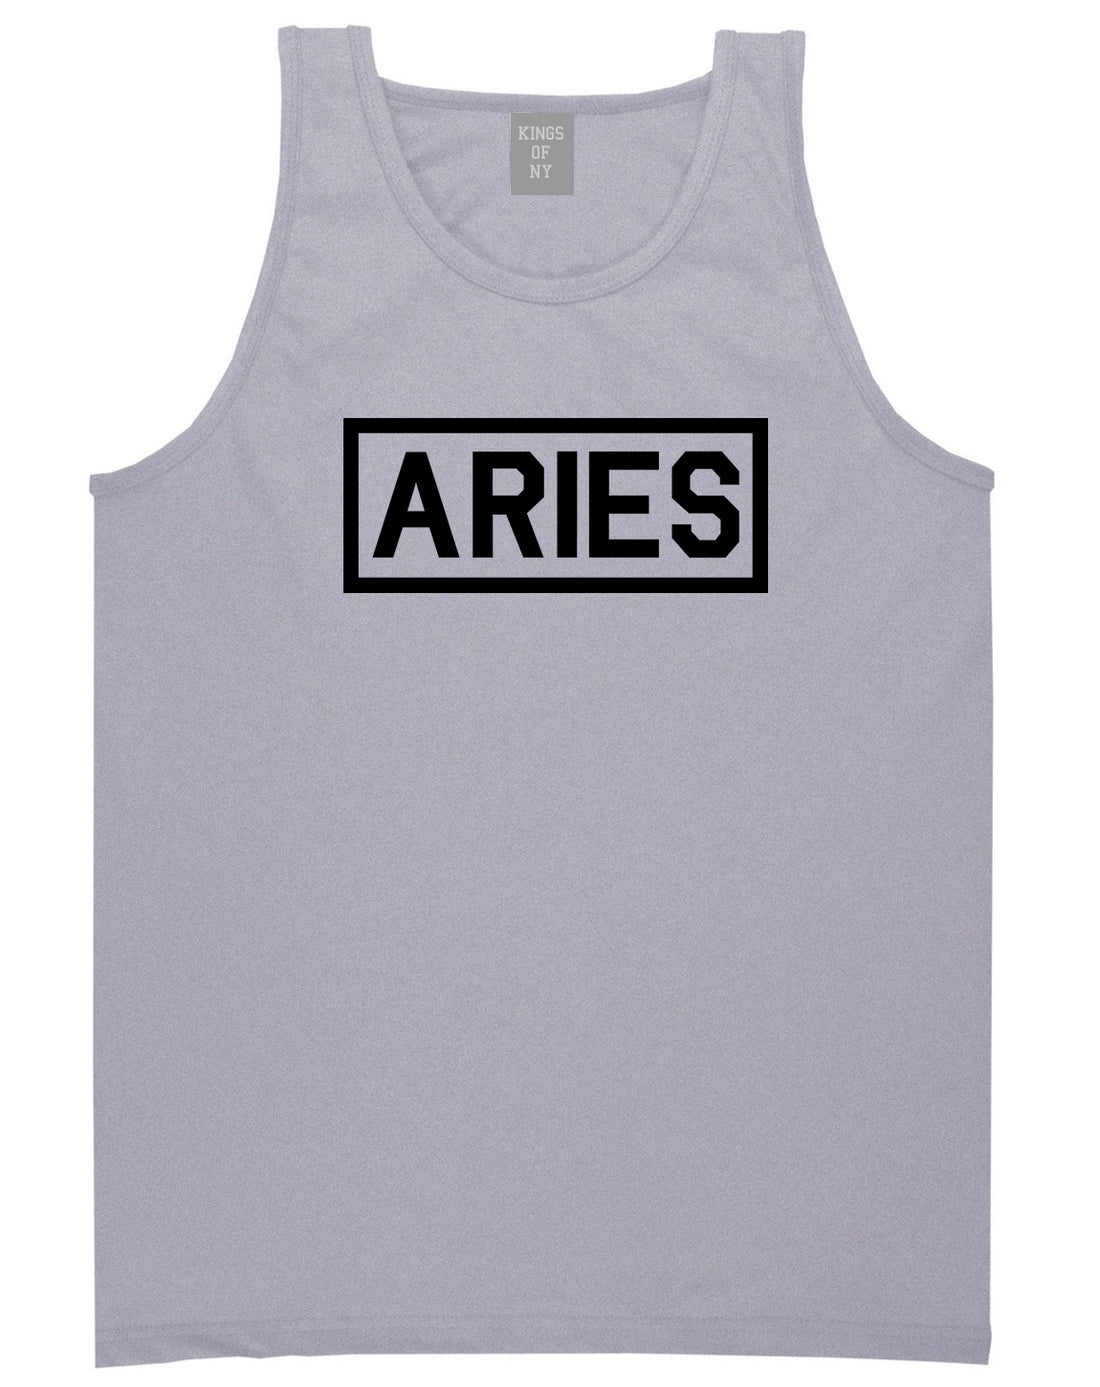 Aries Horoscope Sign Mens Grey Tank Top Shirt by KINGS OF NY